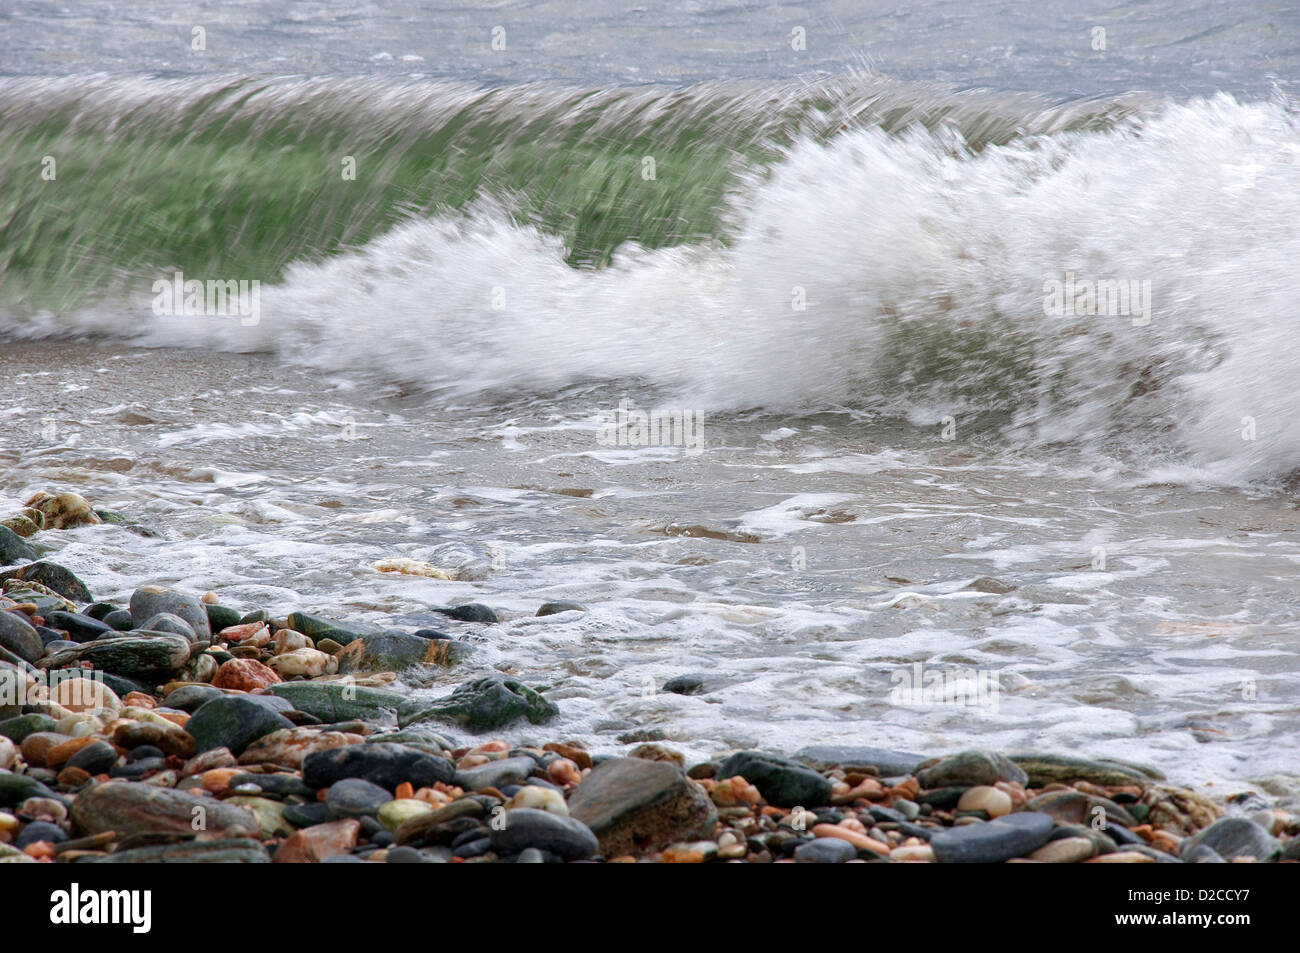 Wave breaking on pebble beach Stock Photo